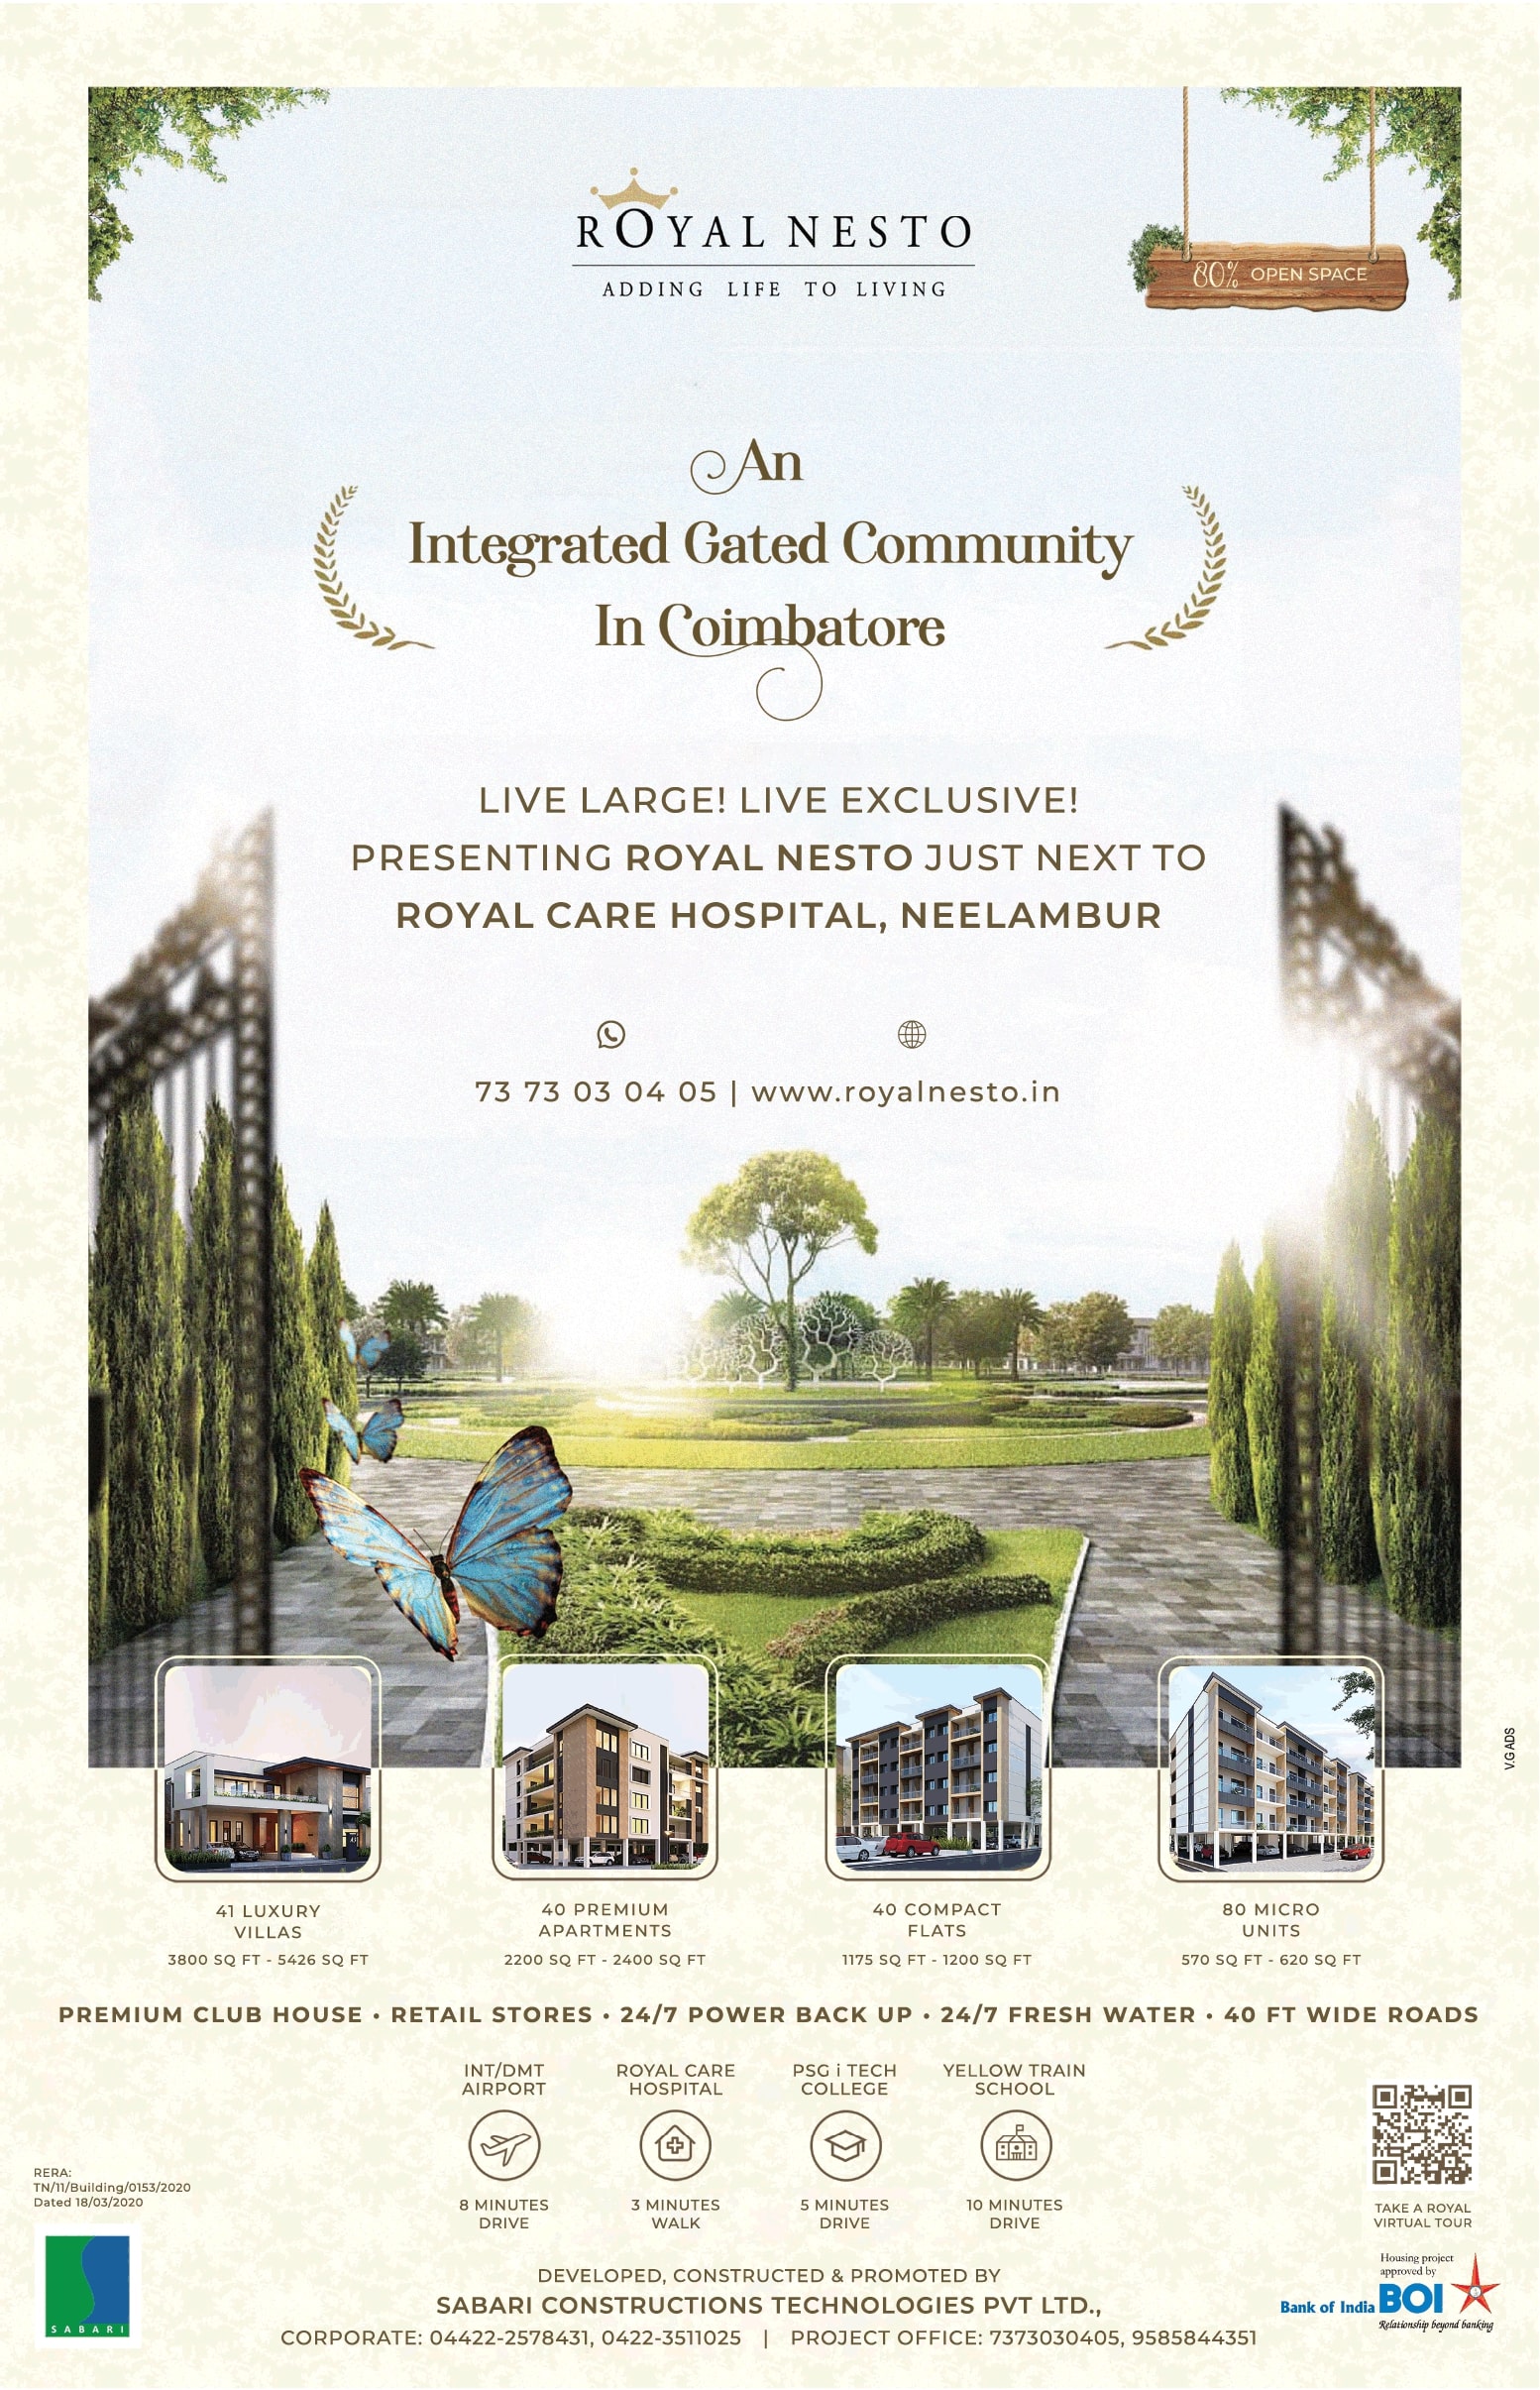 royal-nesto-an-integrated-gated-community-in-neelambur-coimbatore-ad-toi-chennai-1-11-2020